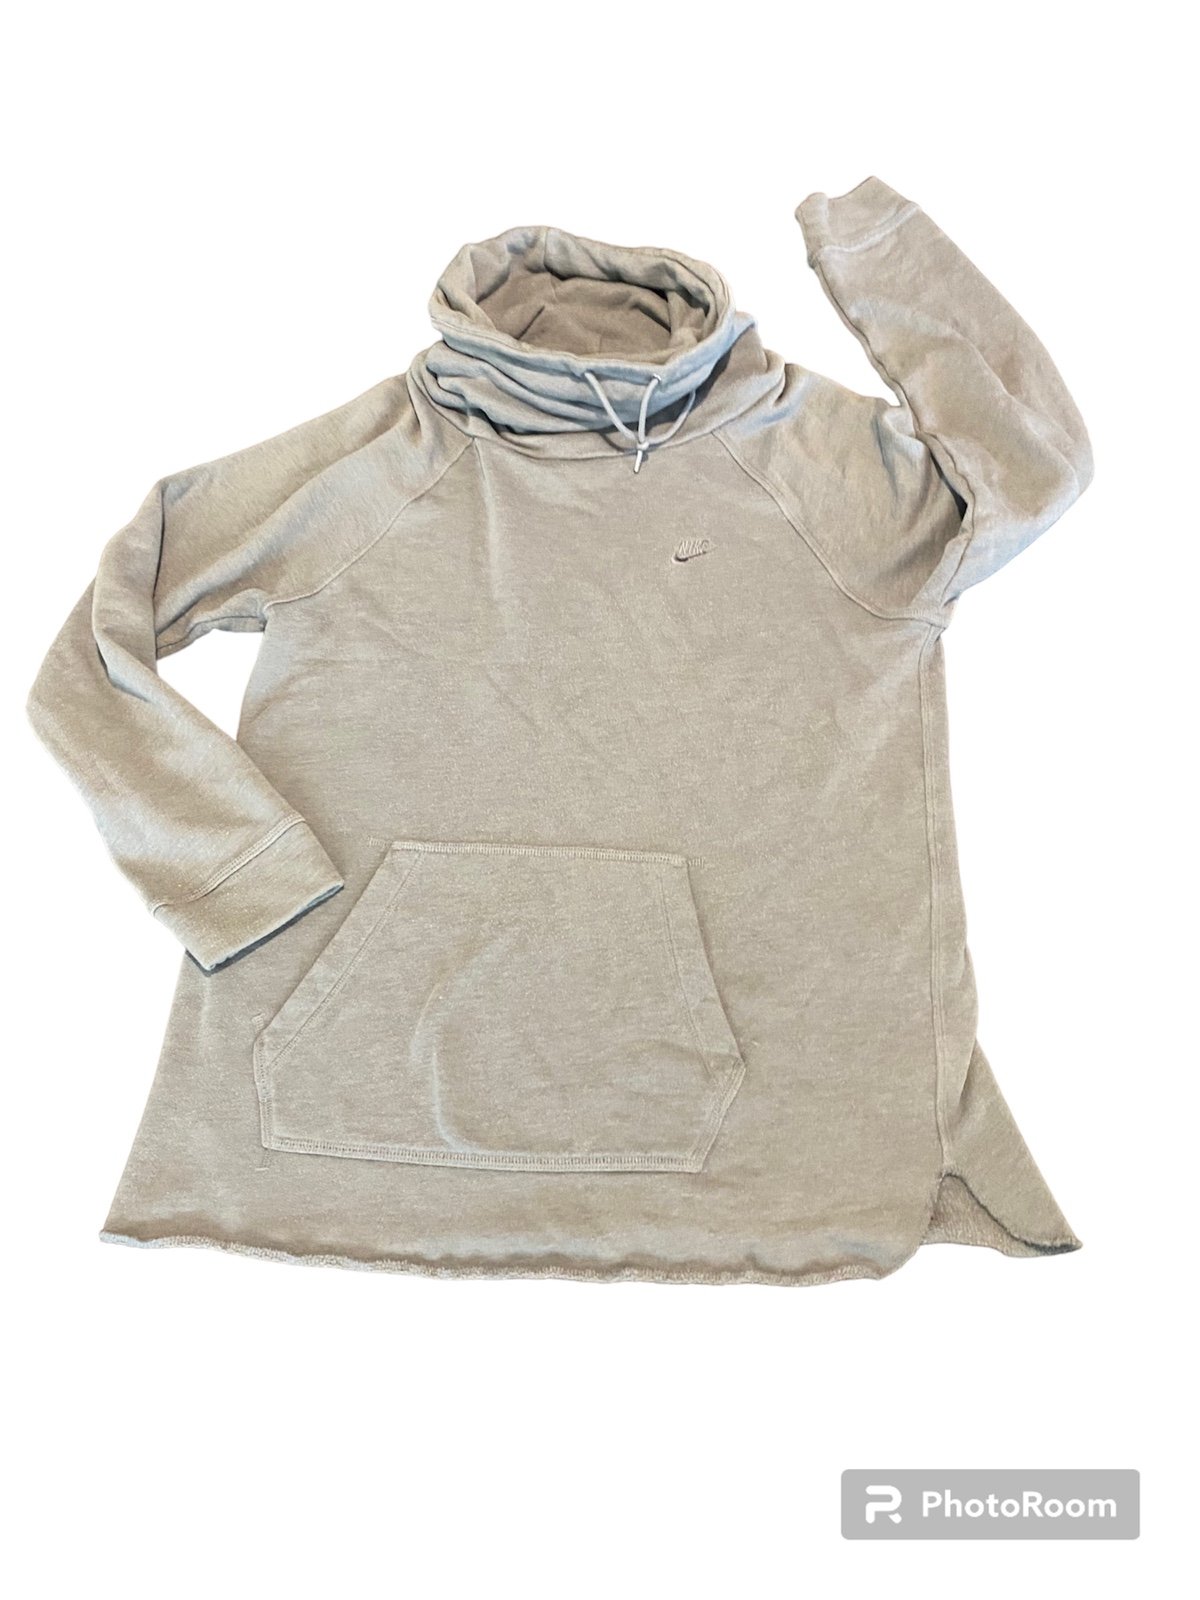 Woman’s Nike Cowl Neck pullover Sweatshirt size M QKxFT7wWq